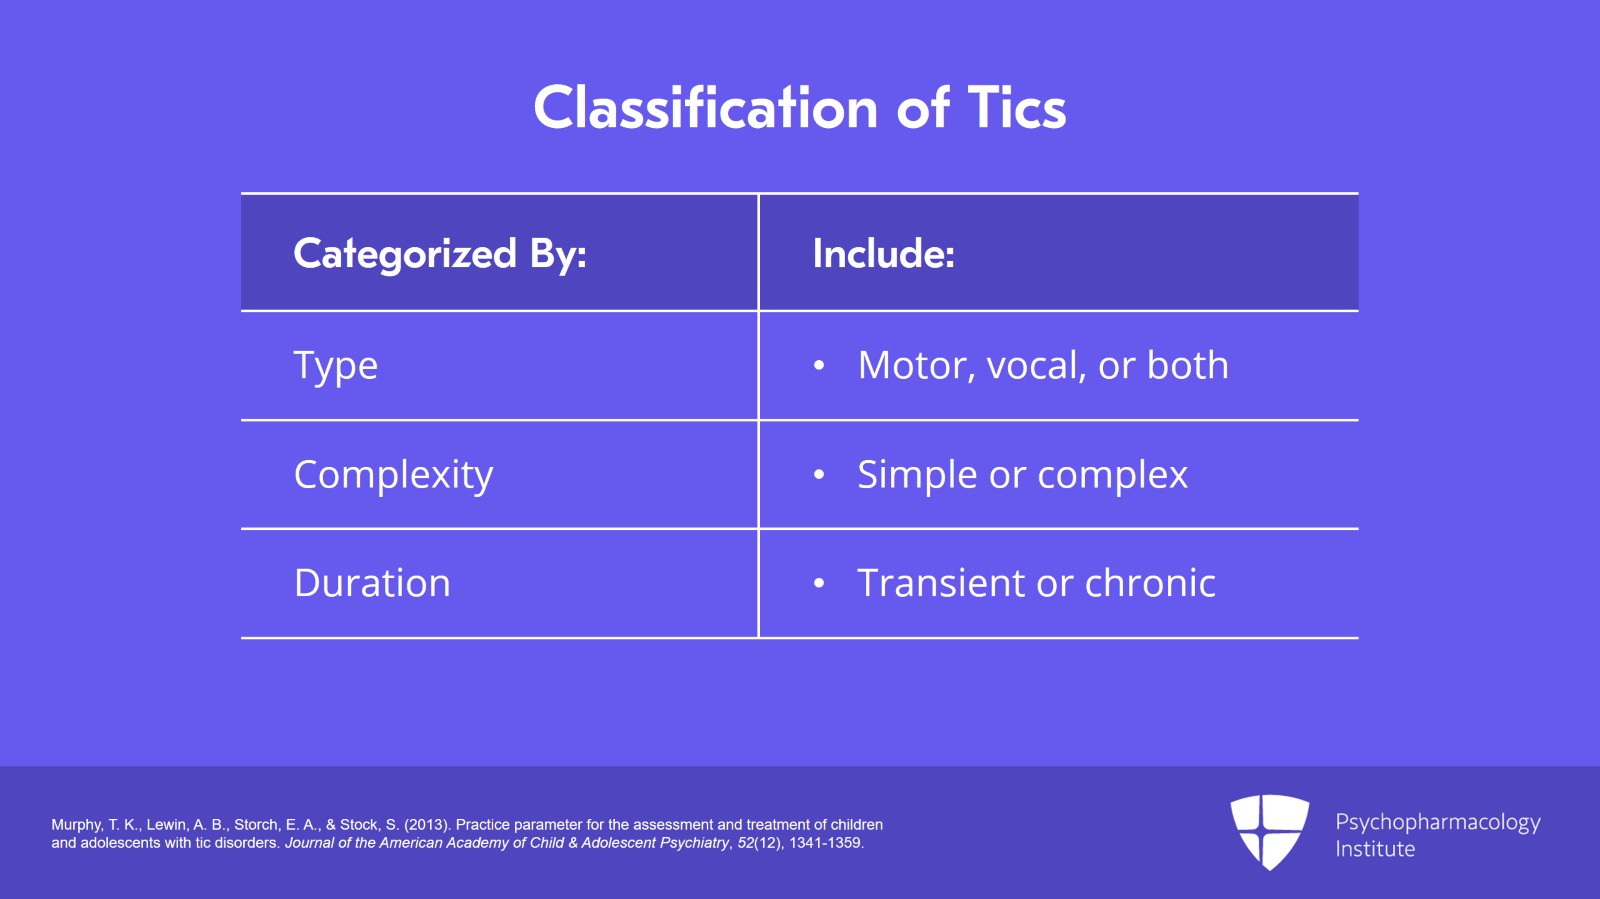 The 2013 TACS classification